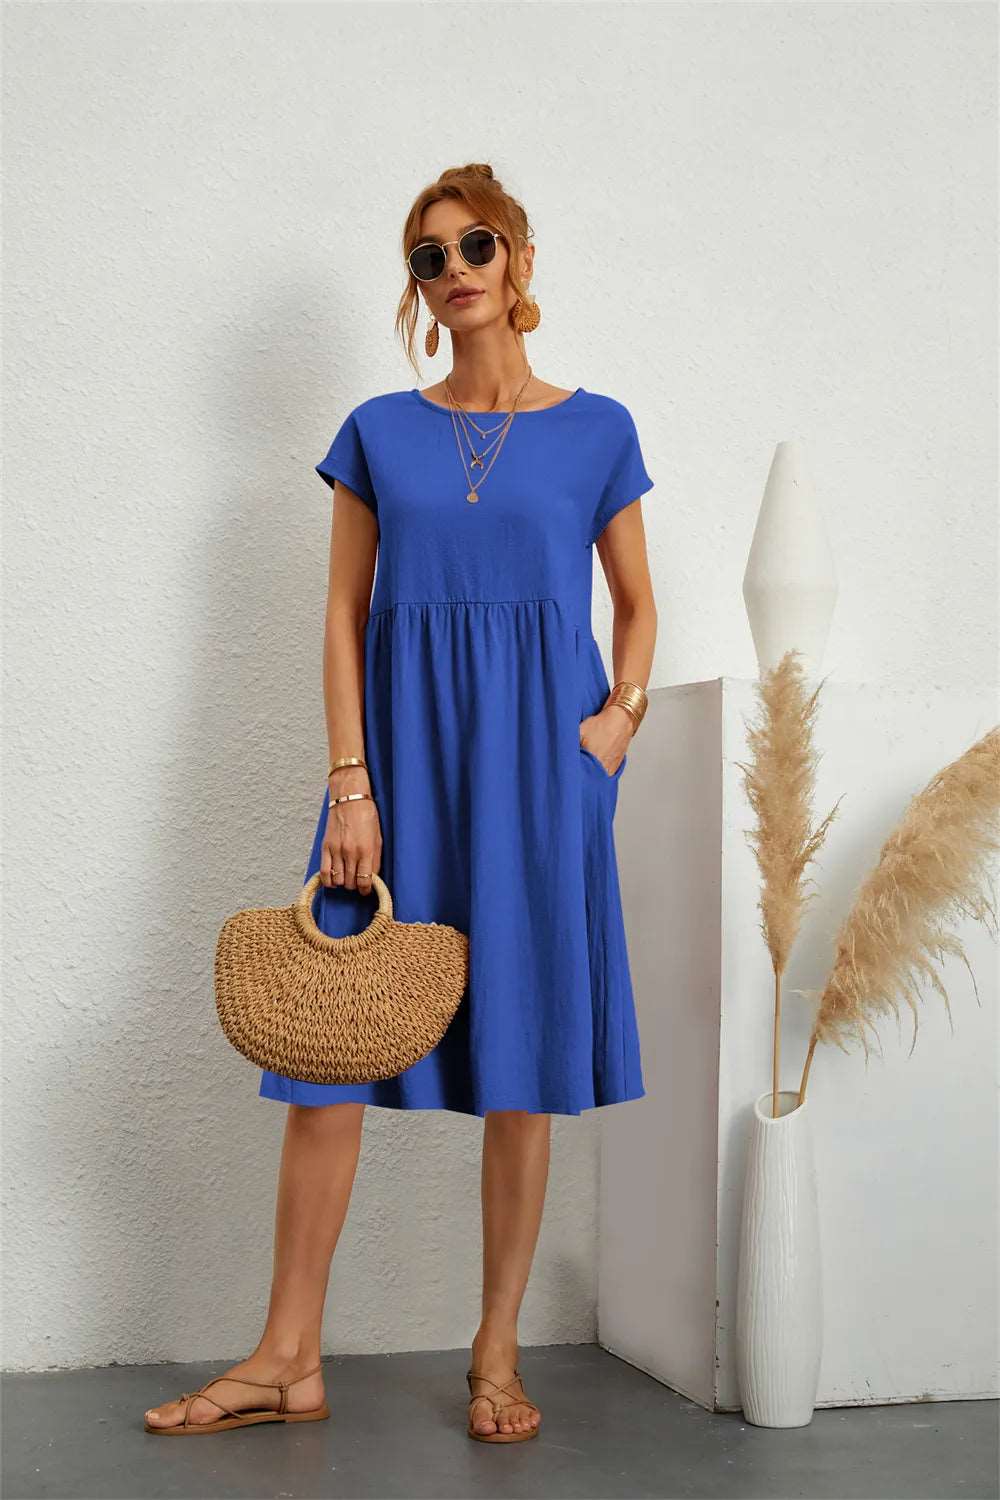 Women's casual dresses | Comfortable knee length with pockets |BEGOGI SHOP | Blue